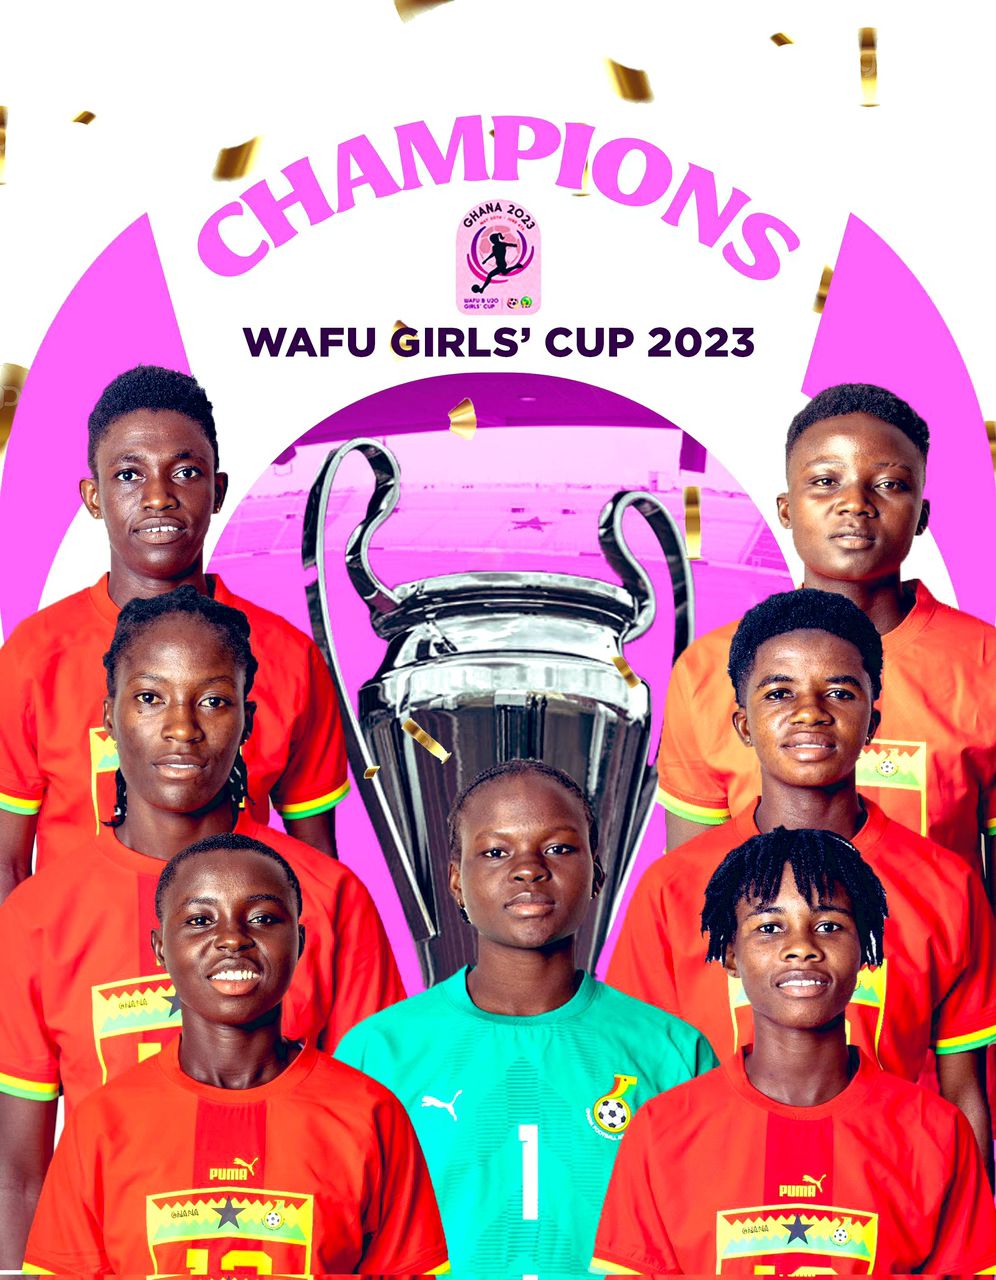 GHANA DISPATCH NIGERIA TO WIN WAFU U-20 GIRLS CUP